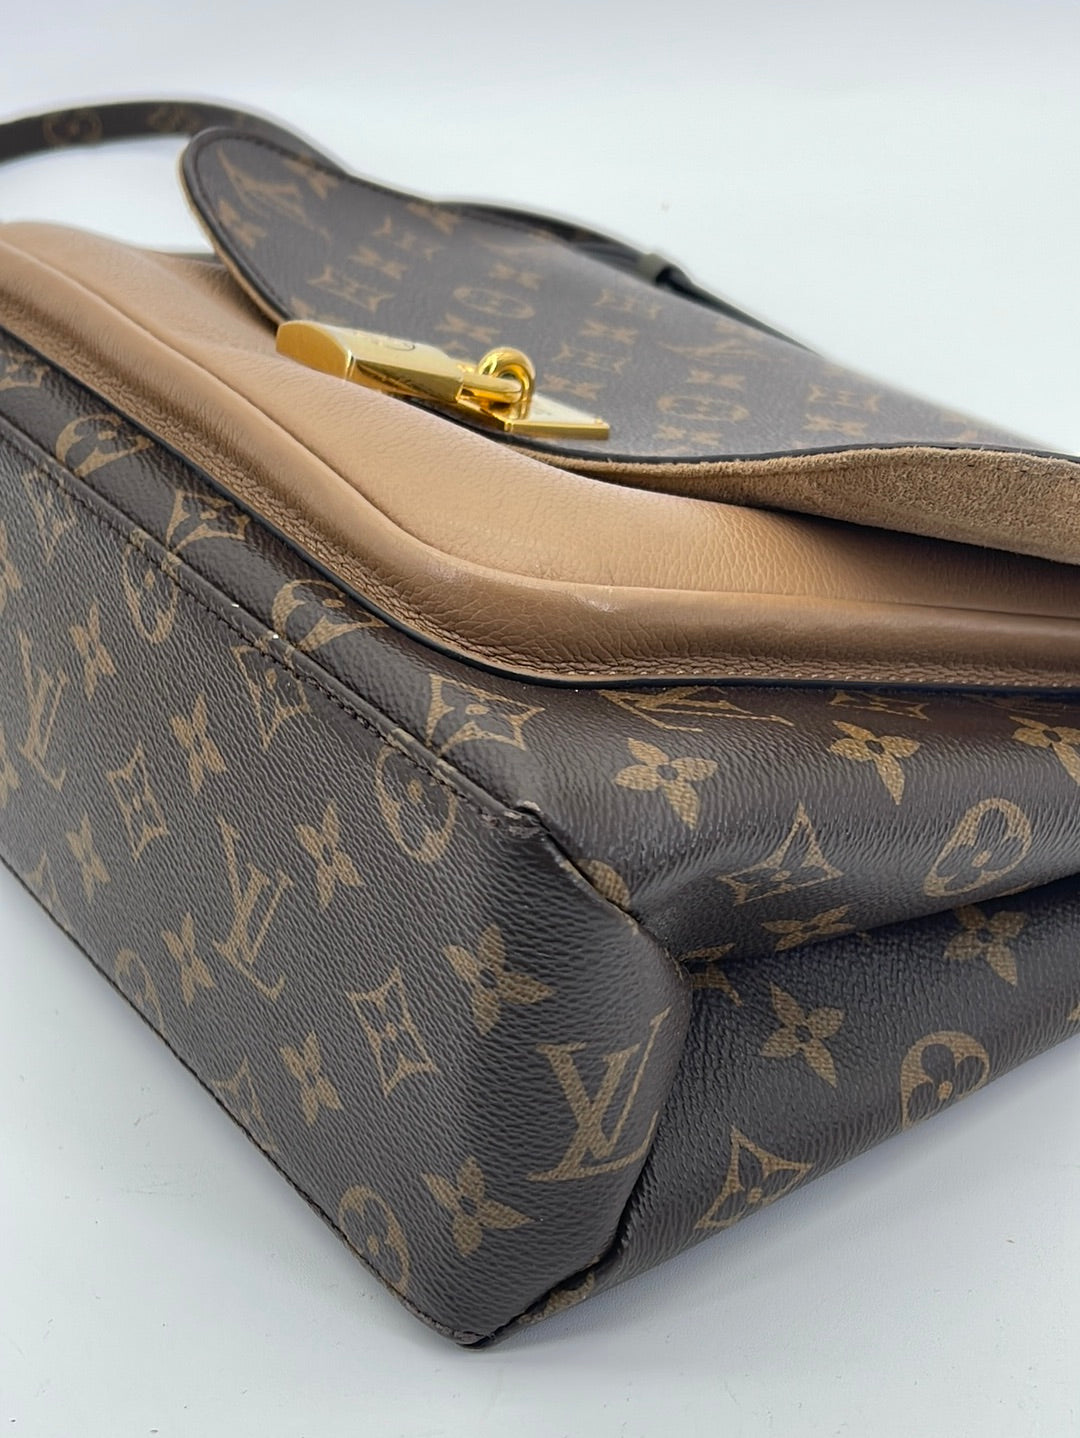 Louis Vuitton Marignan Handbag Monogram Canvas With Leather